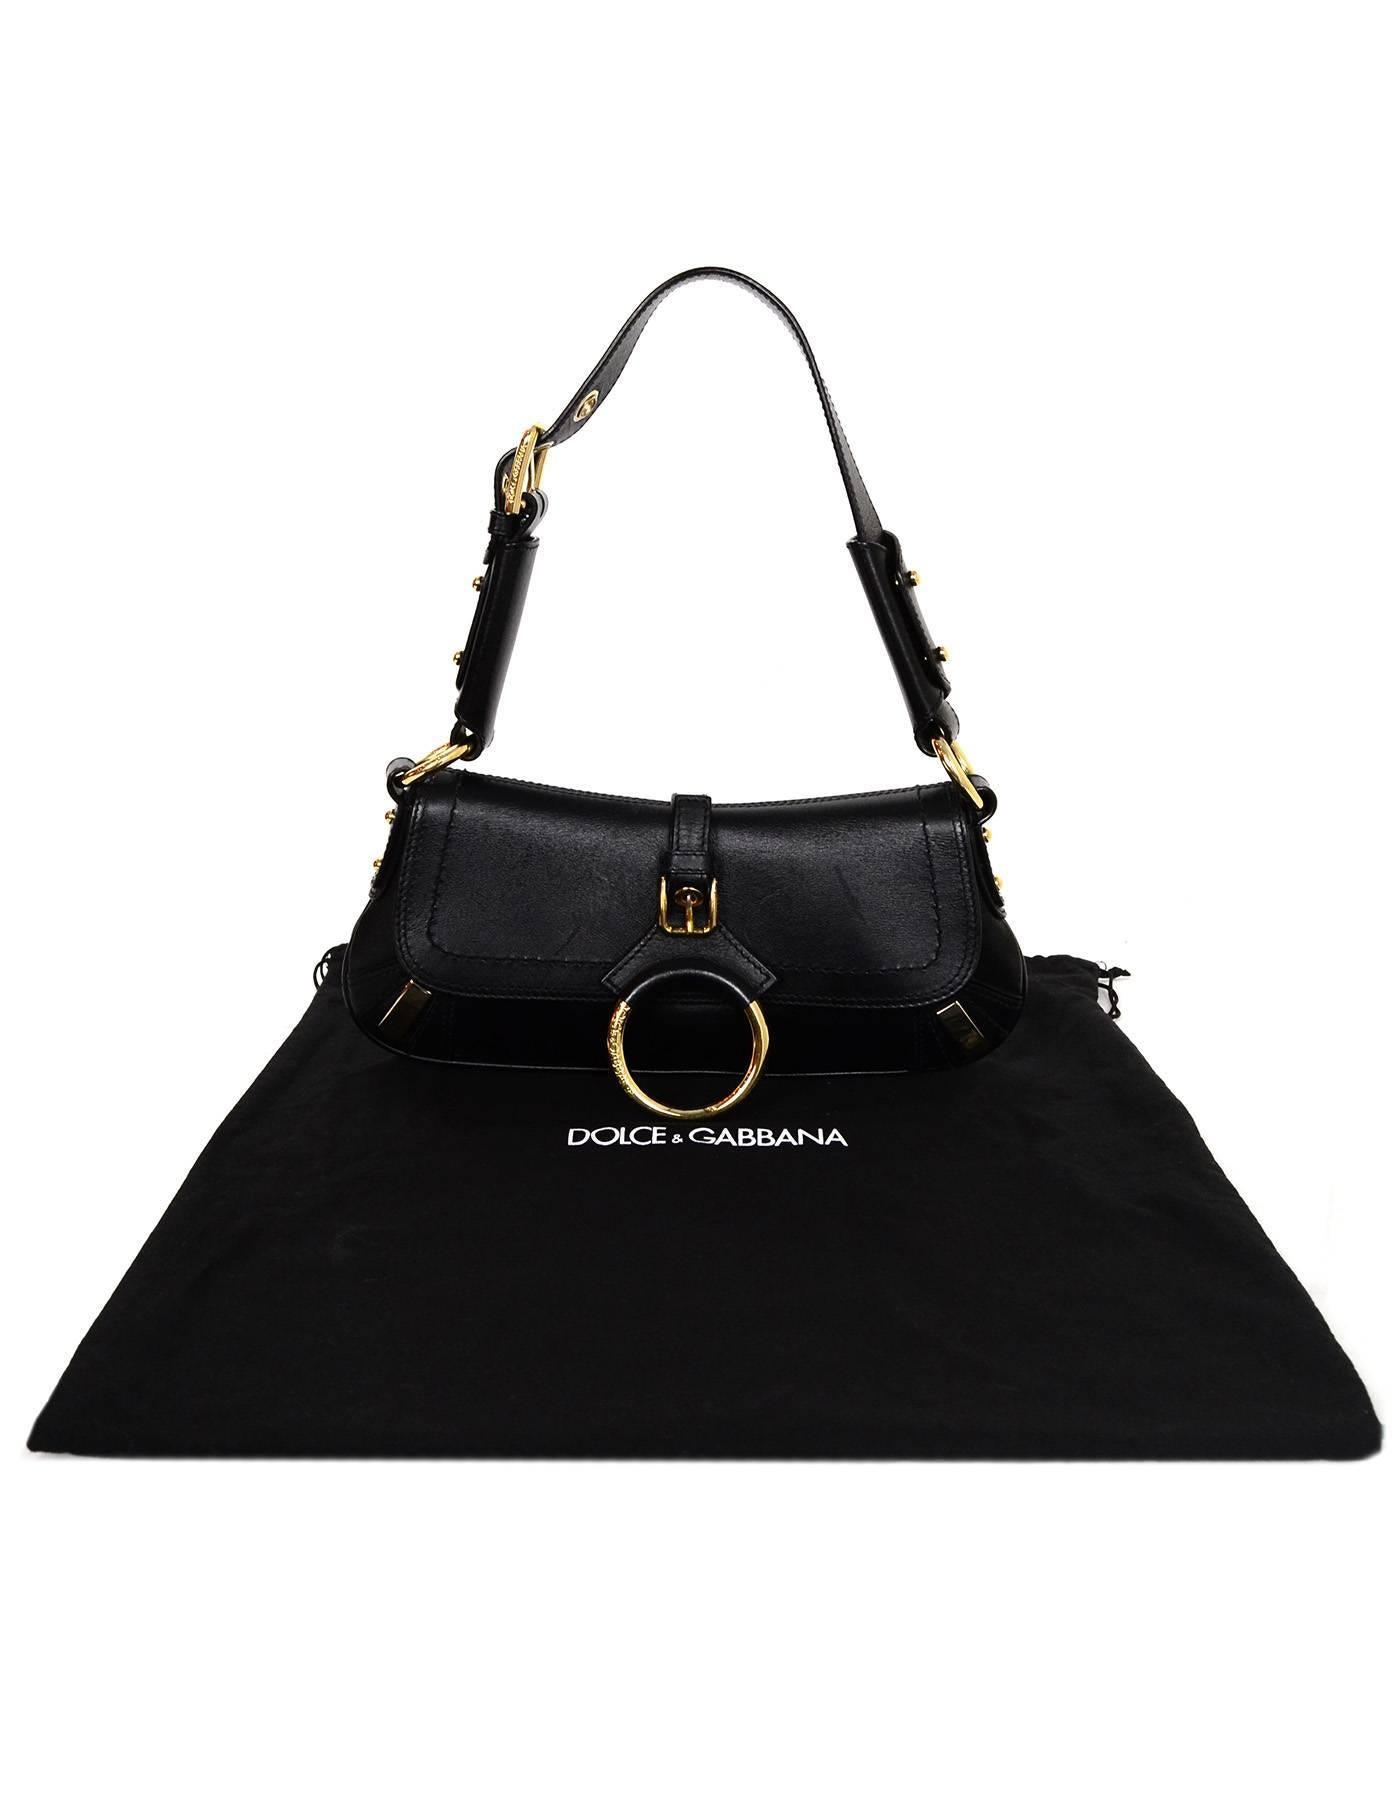 Dolce & Gabbana Black Leather Pochette Bag 4